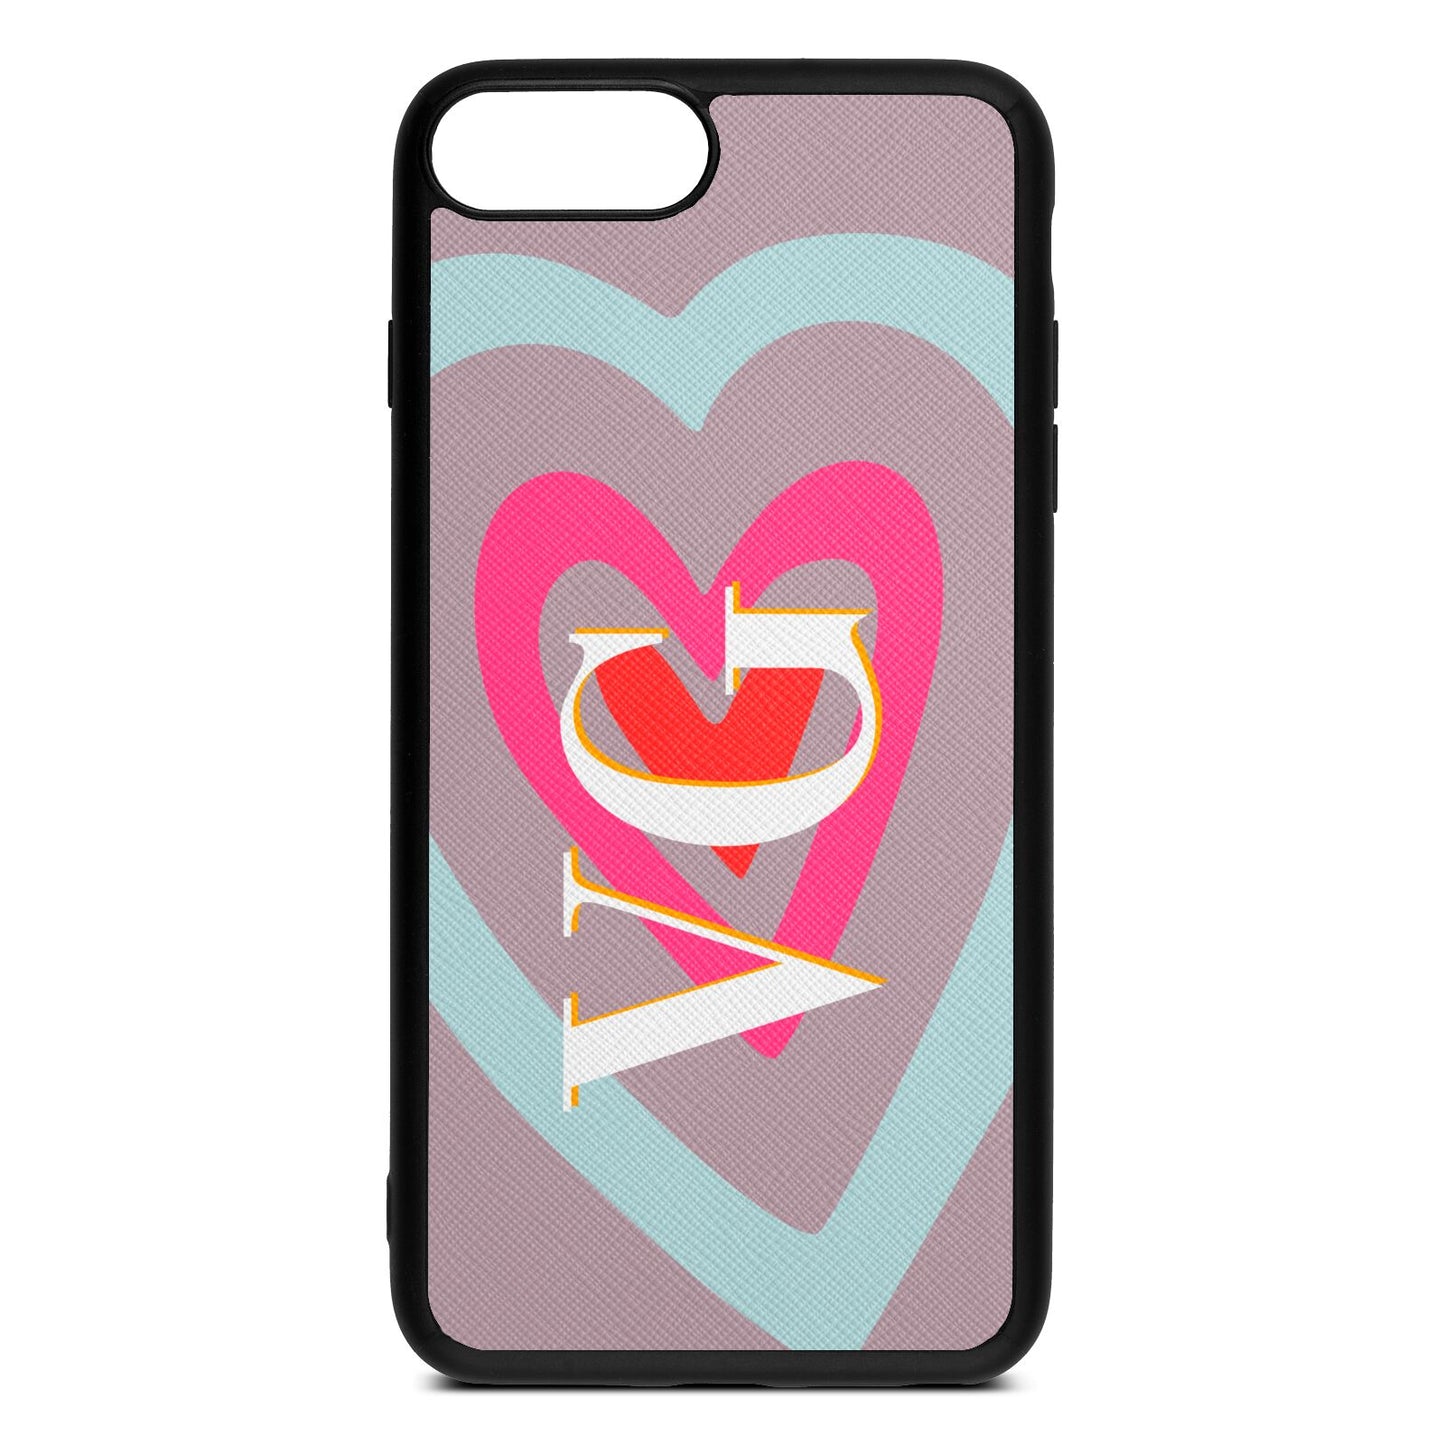 Personalised Initials Heart Lotus Saffiano Leather iPhone 8 Plus Case